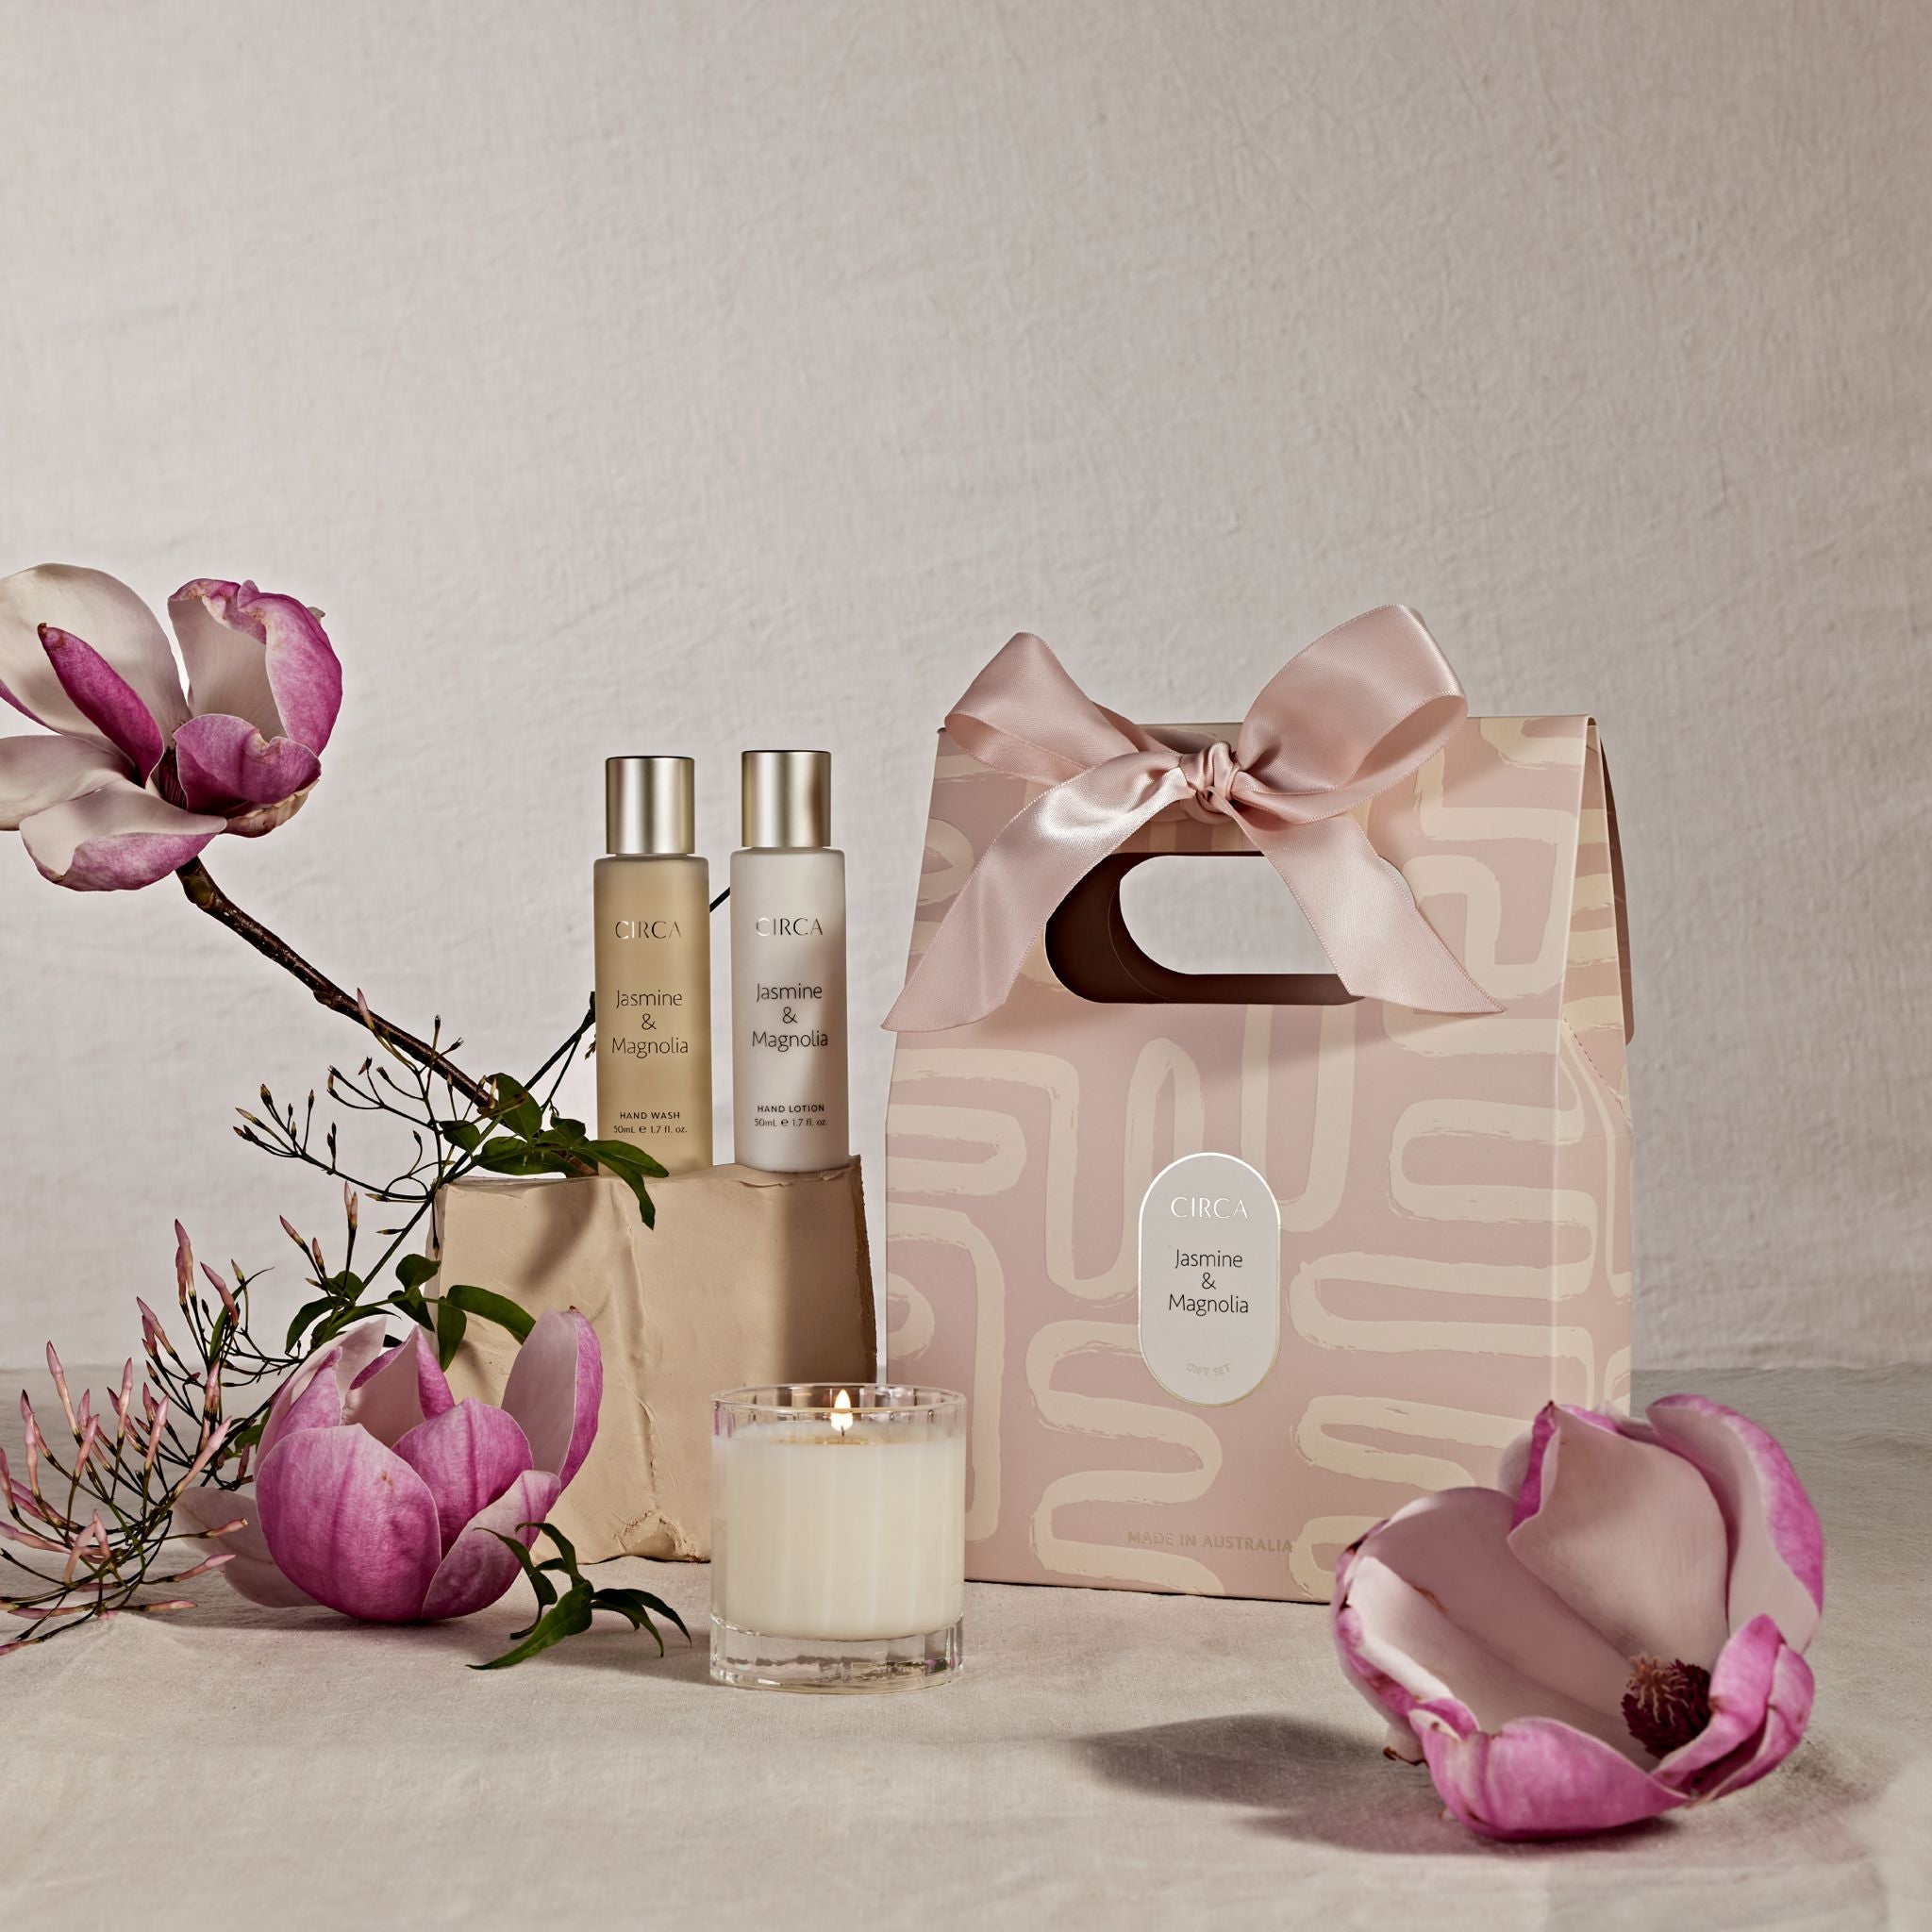 Fragrance Gift Bag Set - Jasmine & Magnolia-Candles & Fragrance-Circa-The Bay Room